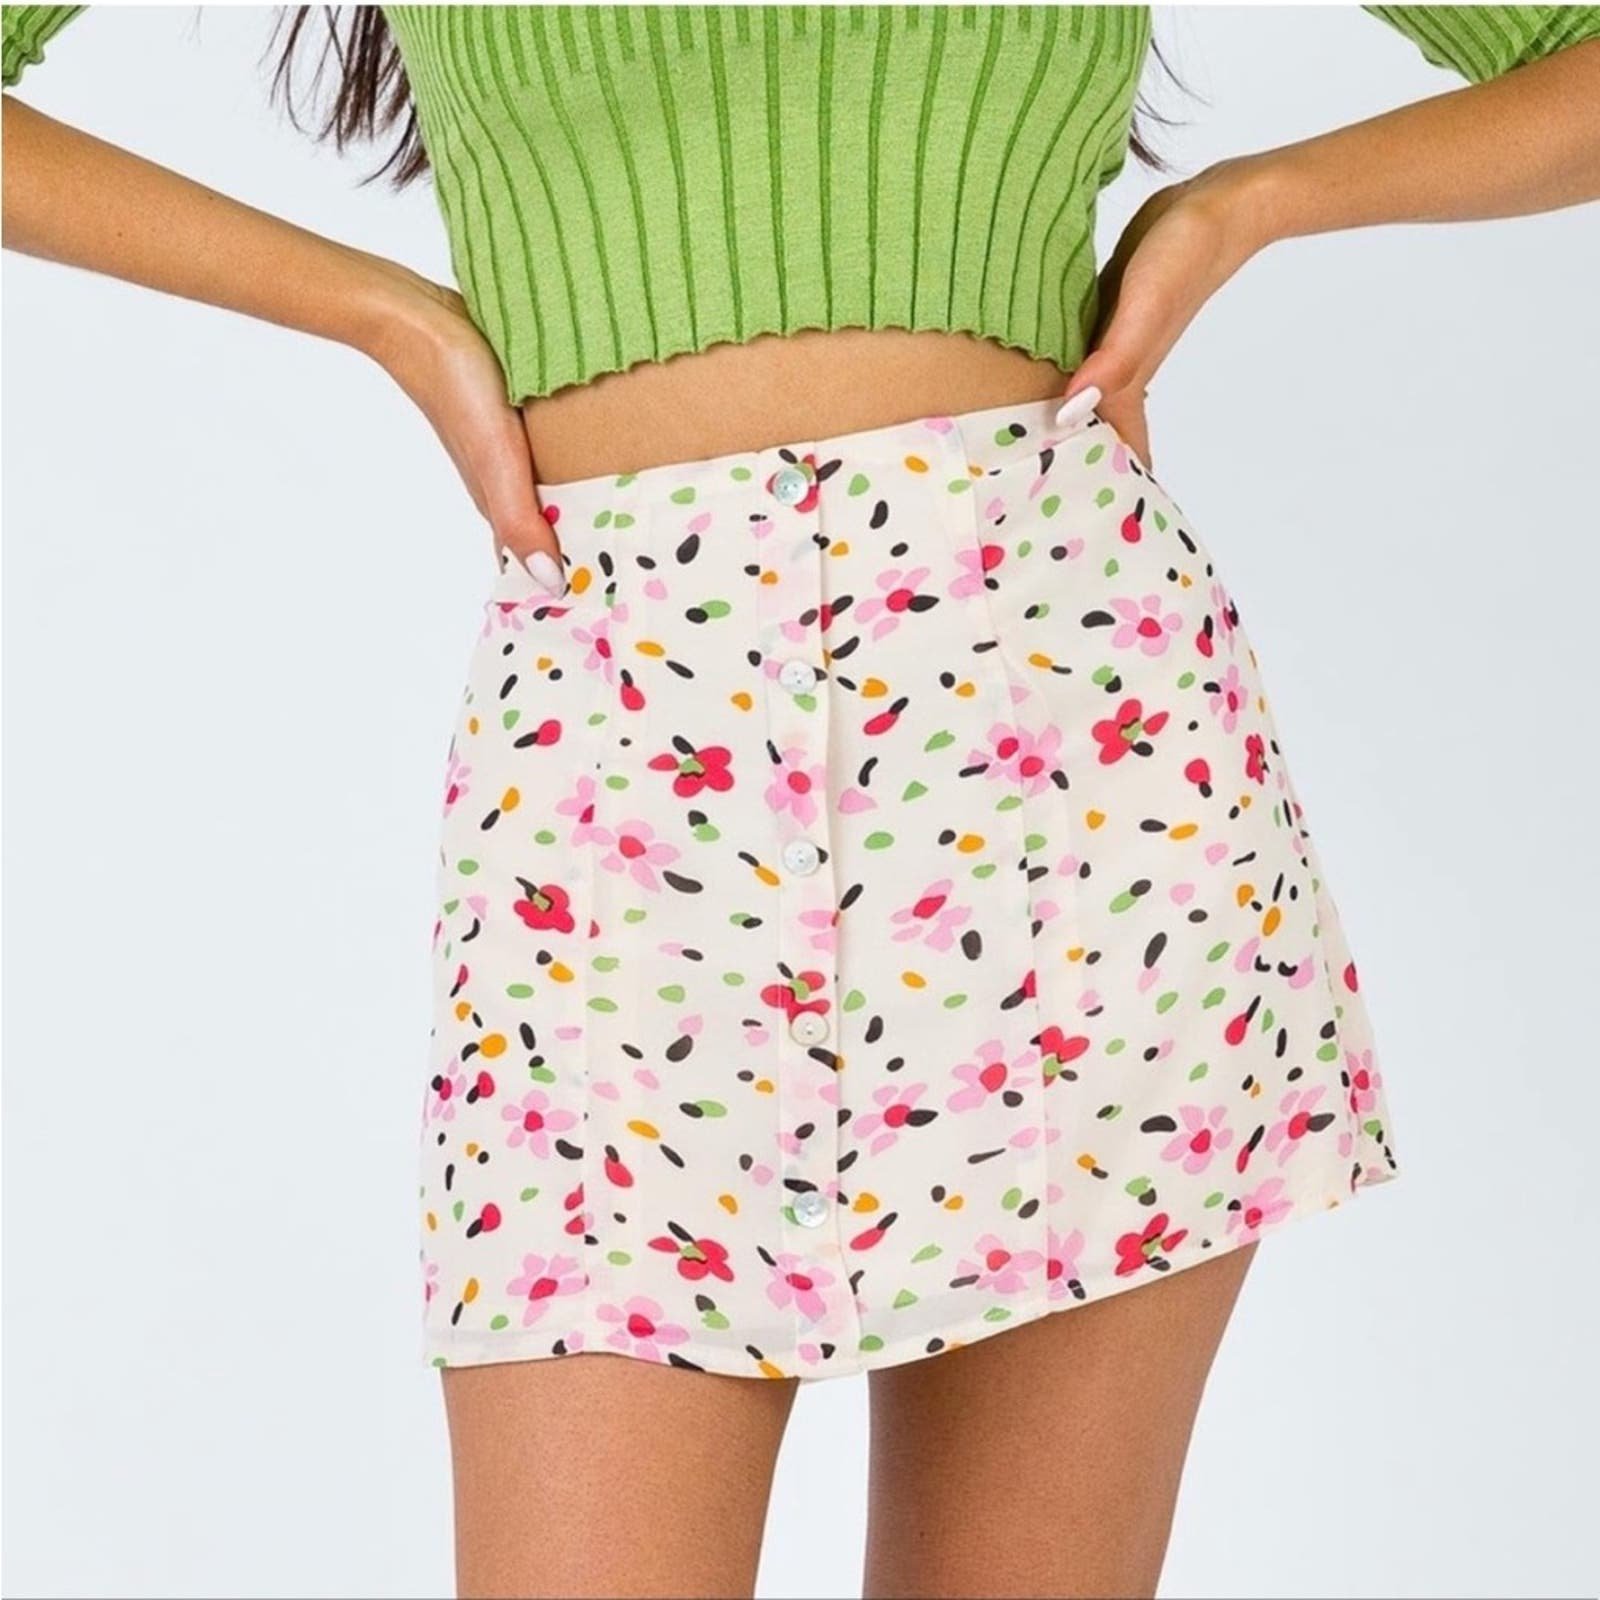 Buy NEW Princess Polly Dede Mini Skirt Size US 6 goQ8ai